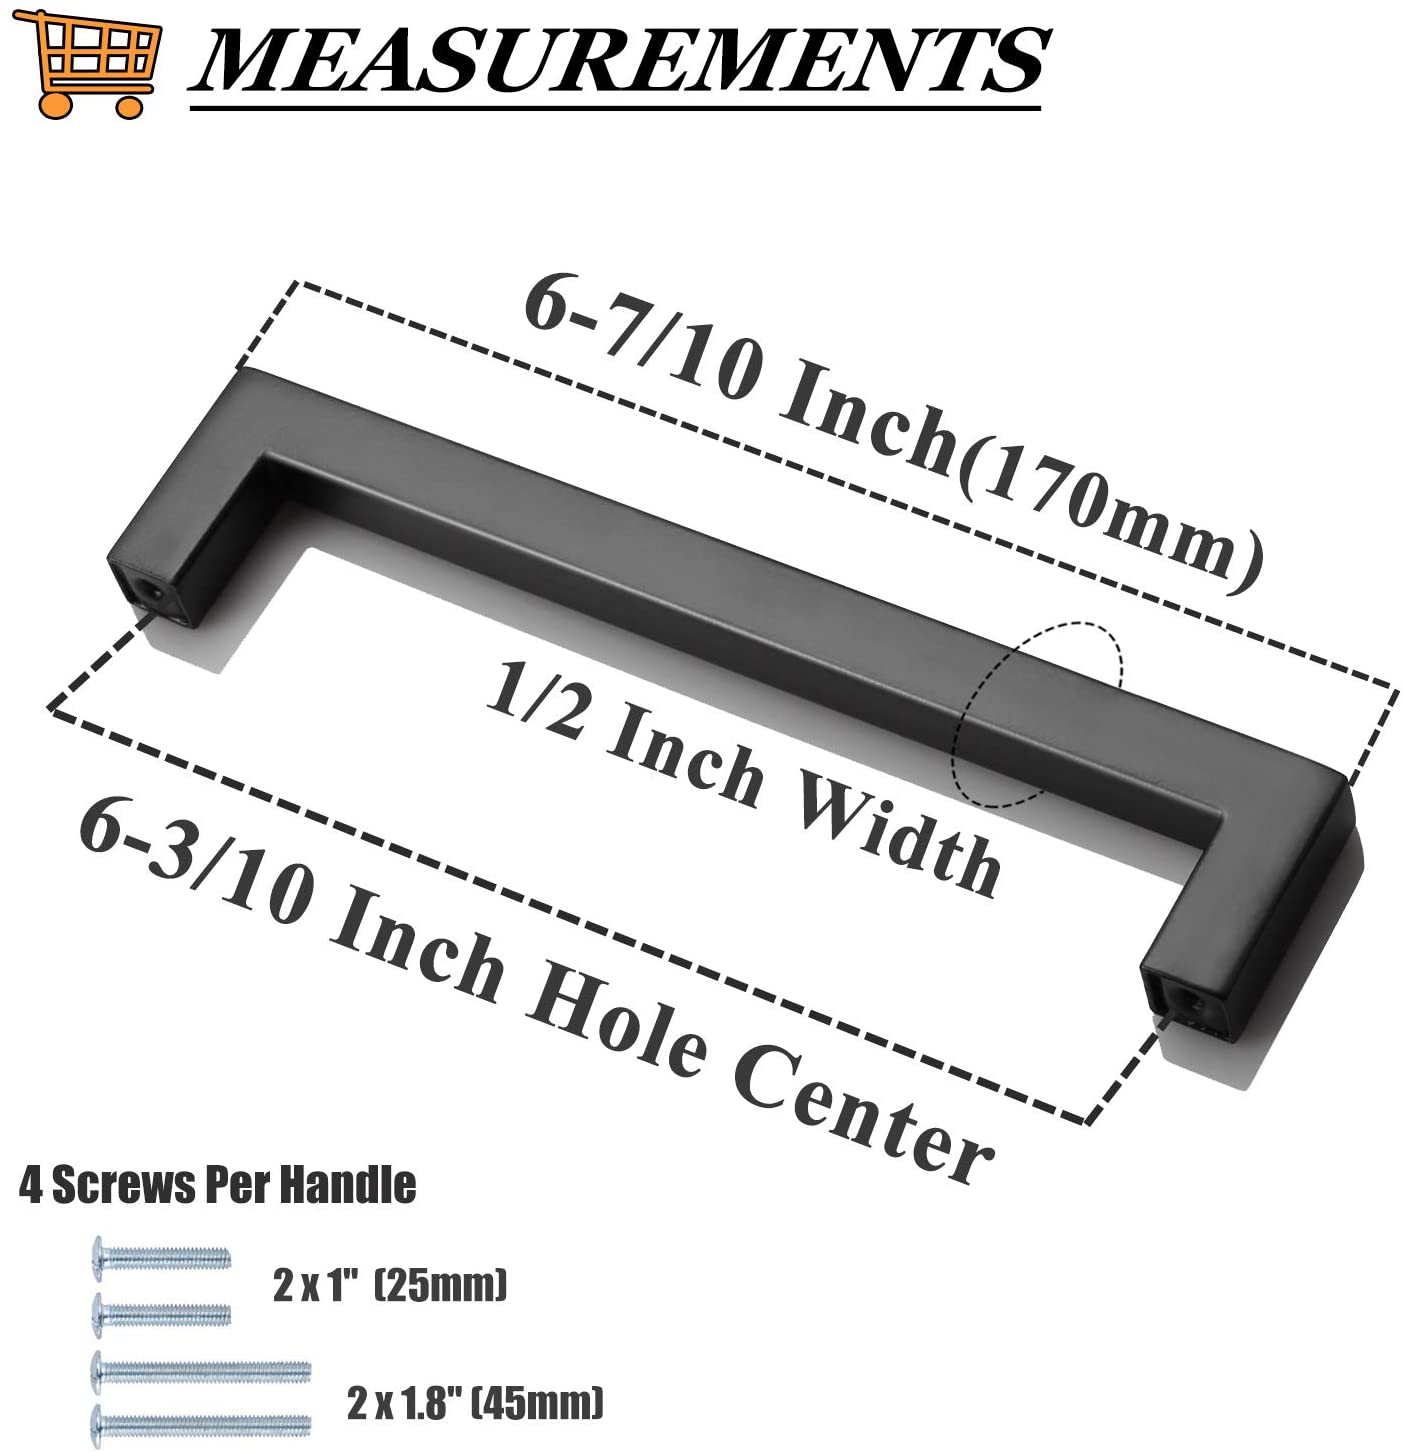 1/2" Square Cabinet Handles Black Finish 160mm 6 3/10inch Hole Centers PDDJS12HBK160 - Probrico